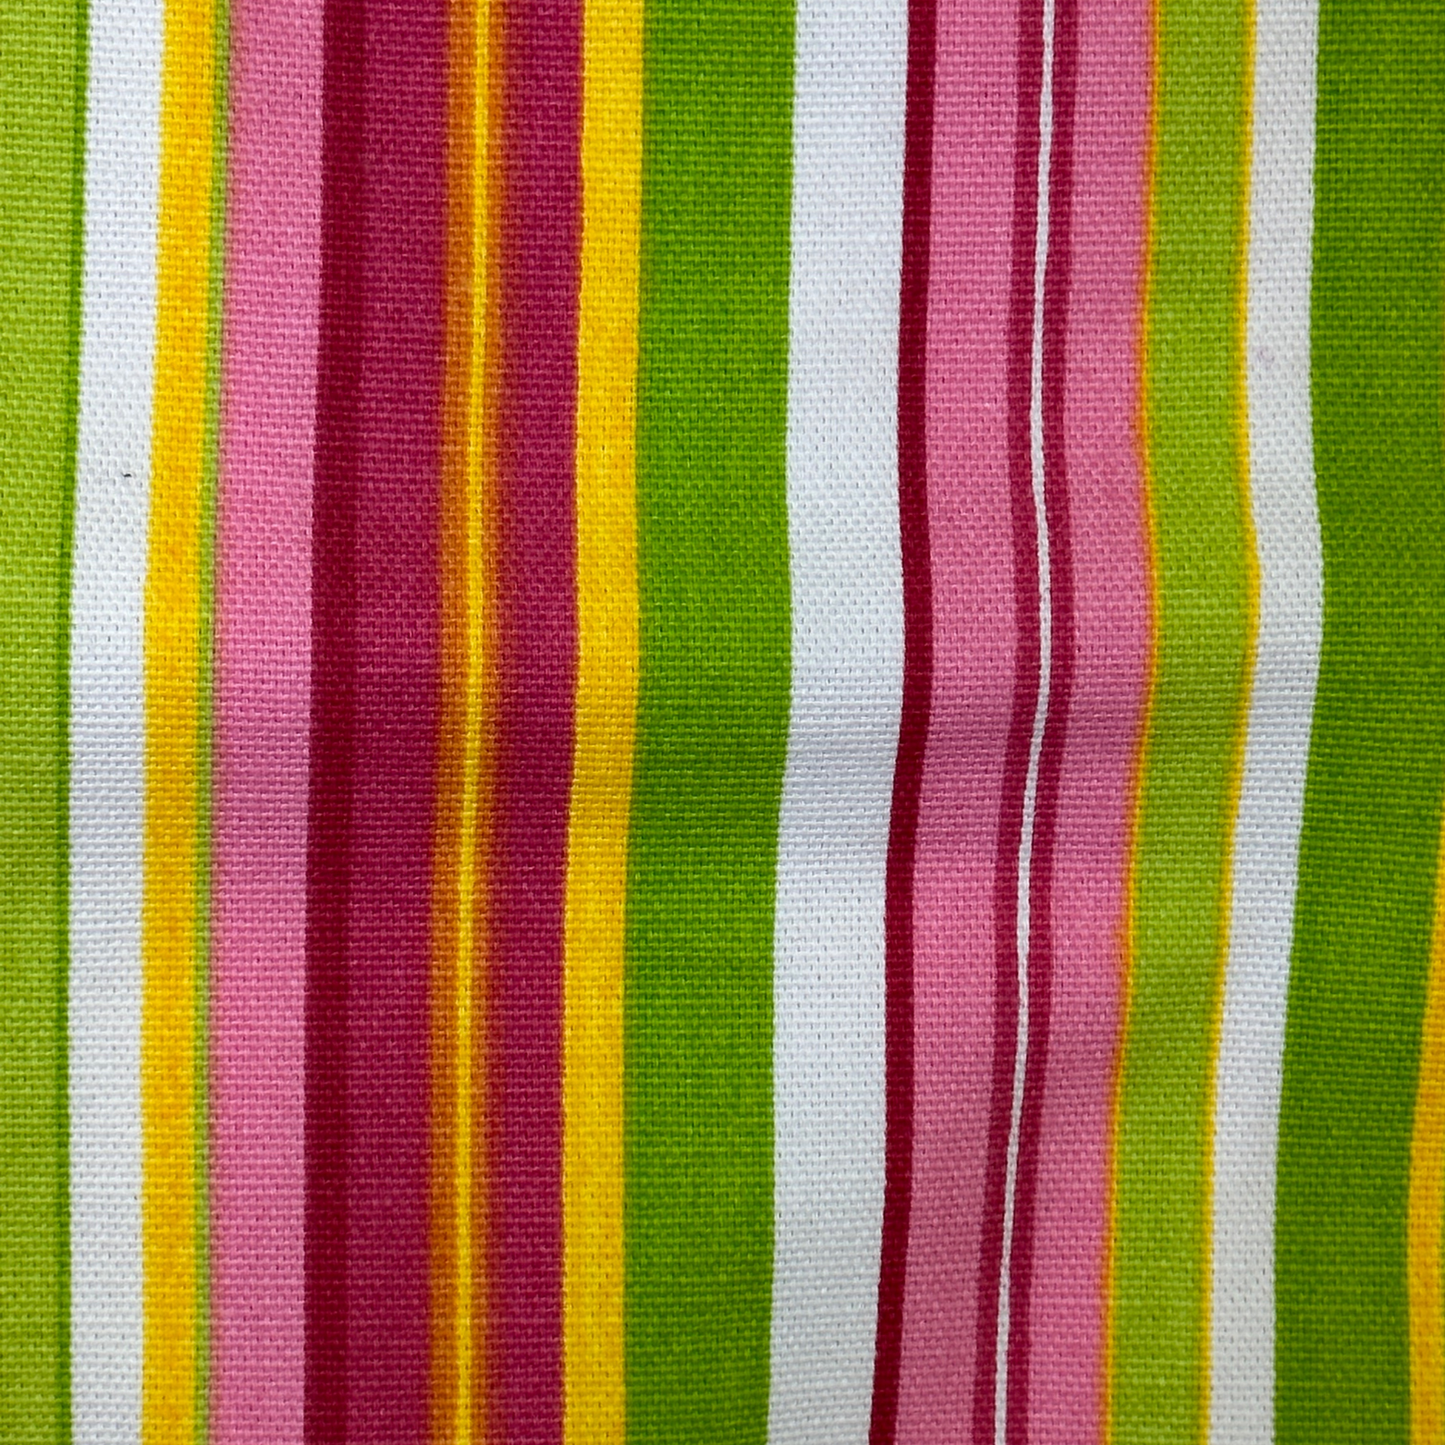 Rainbow Stripes - Handmade Reversible Aprons